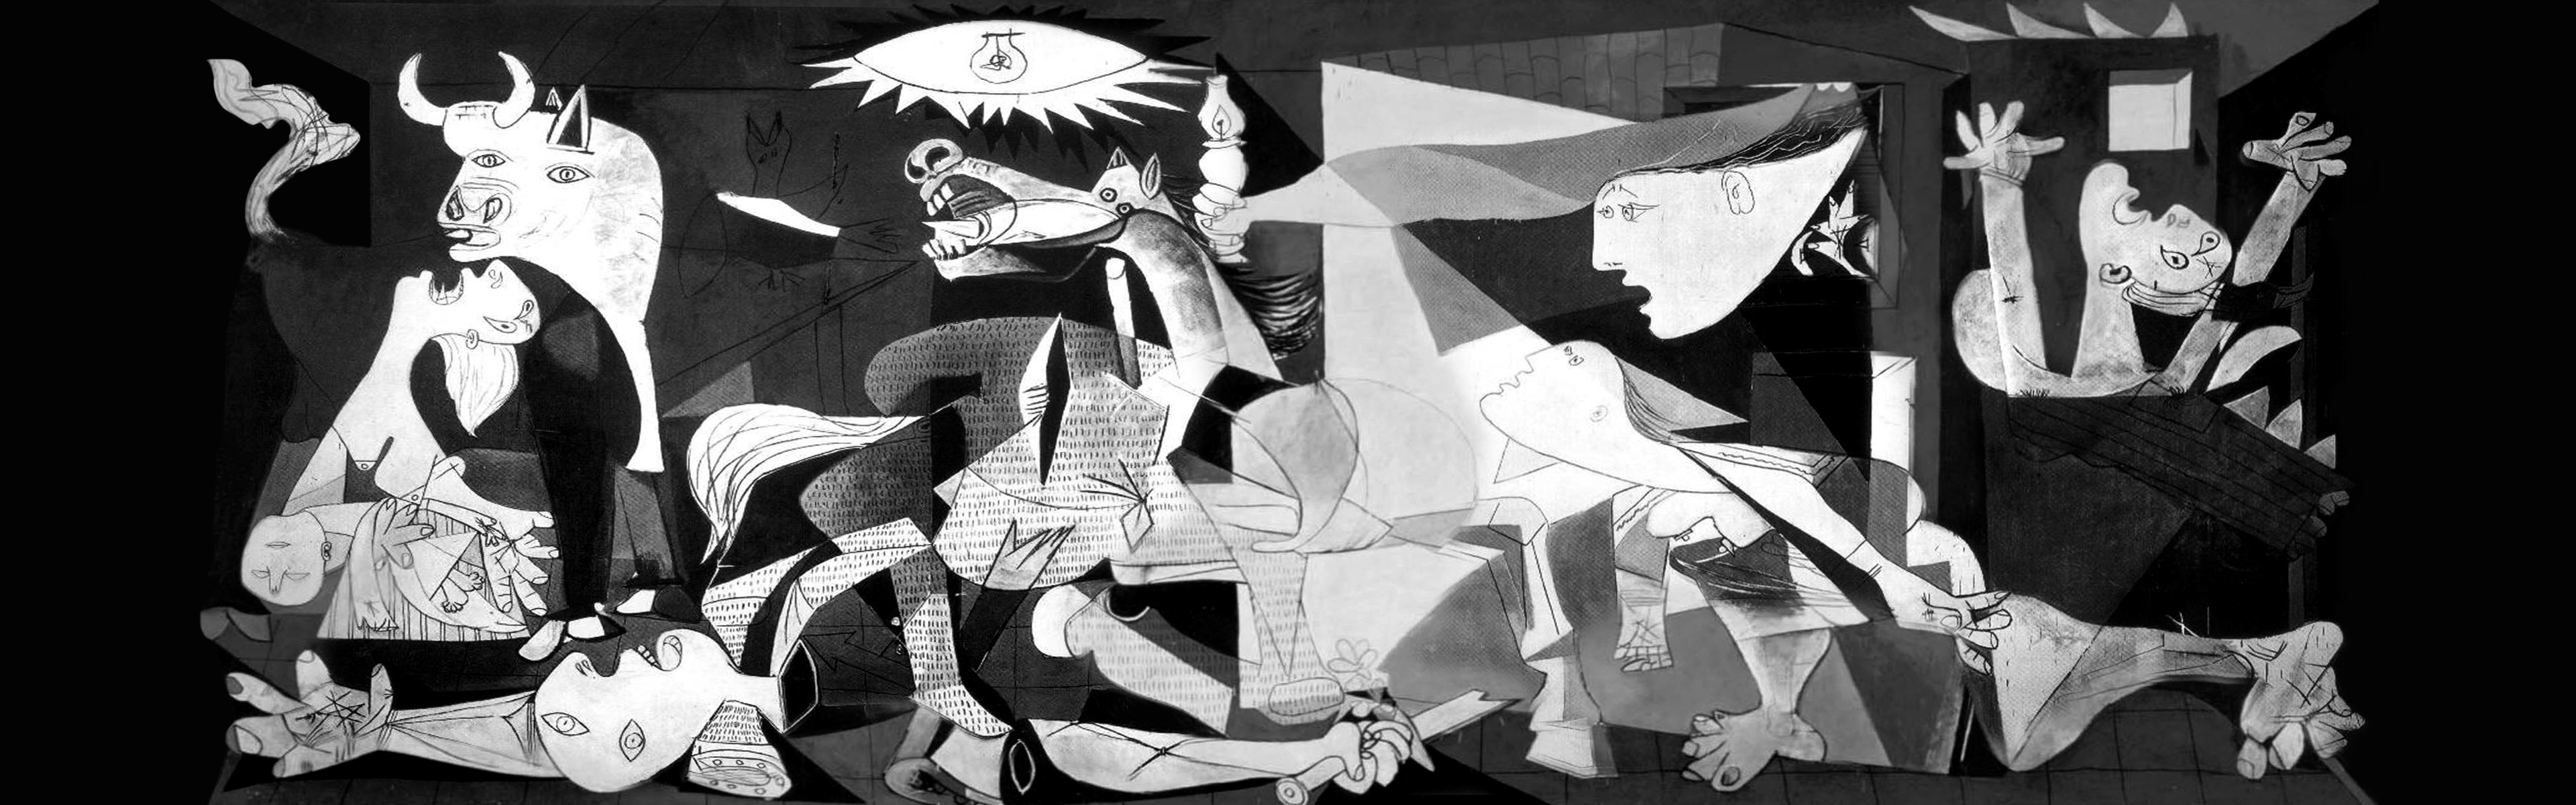 Pablo Picasso, Guernica - desktop wallpaper